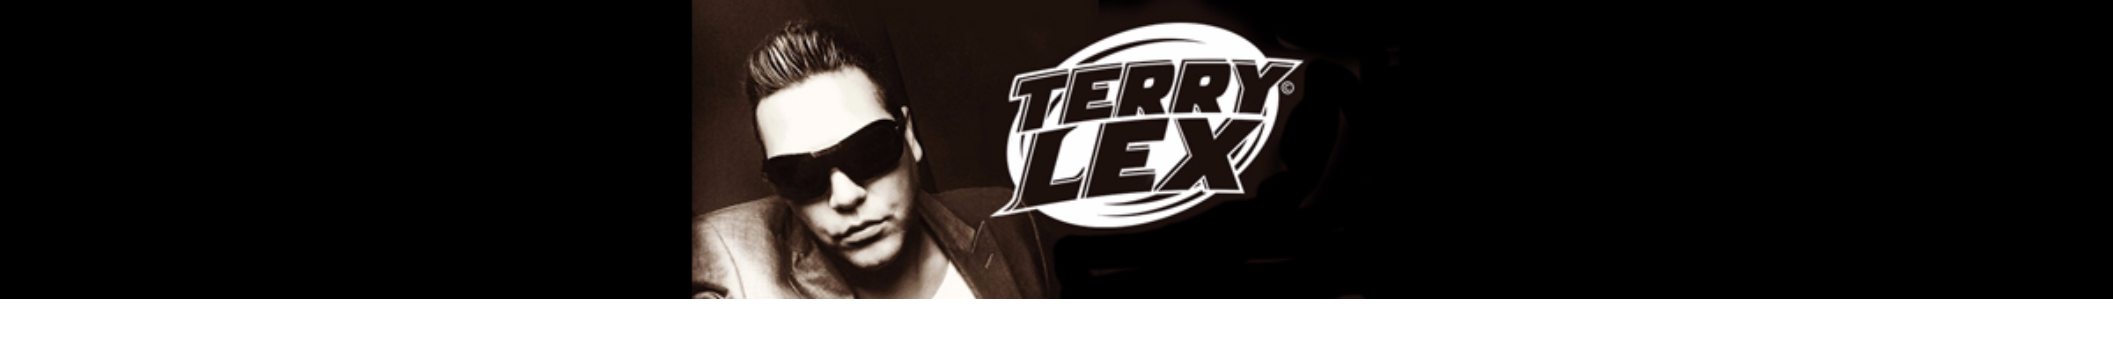 Terry Lex